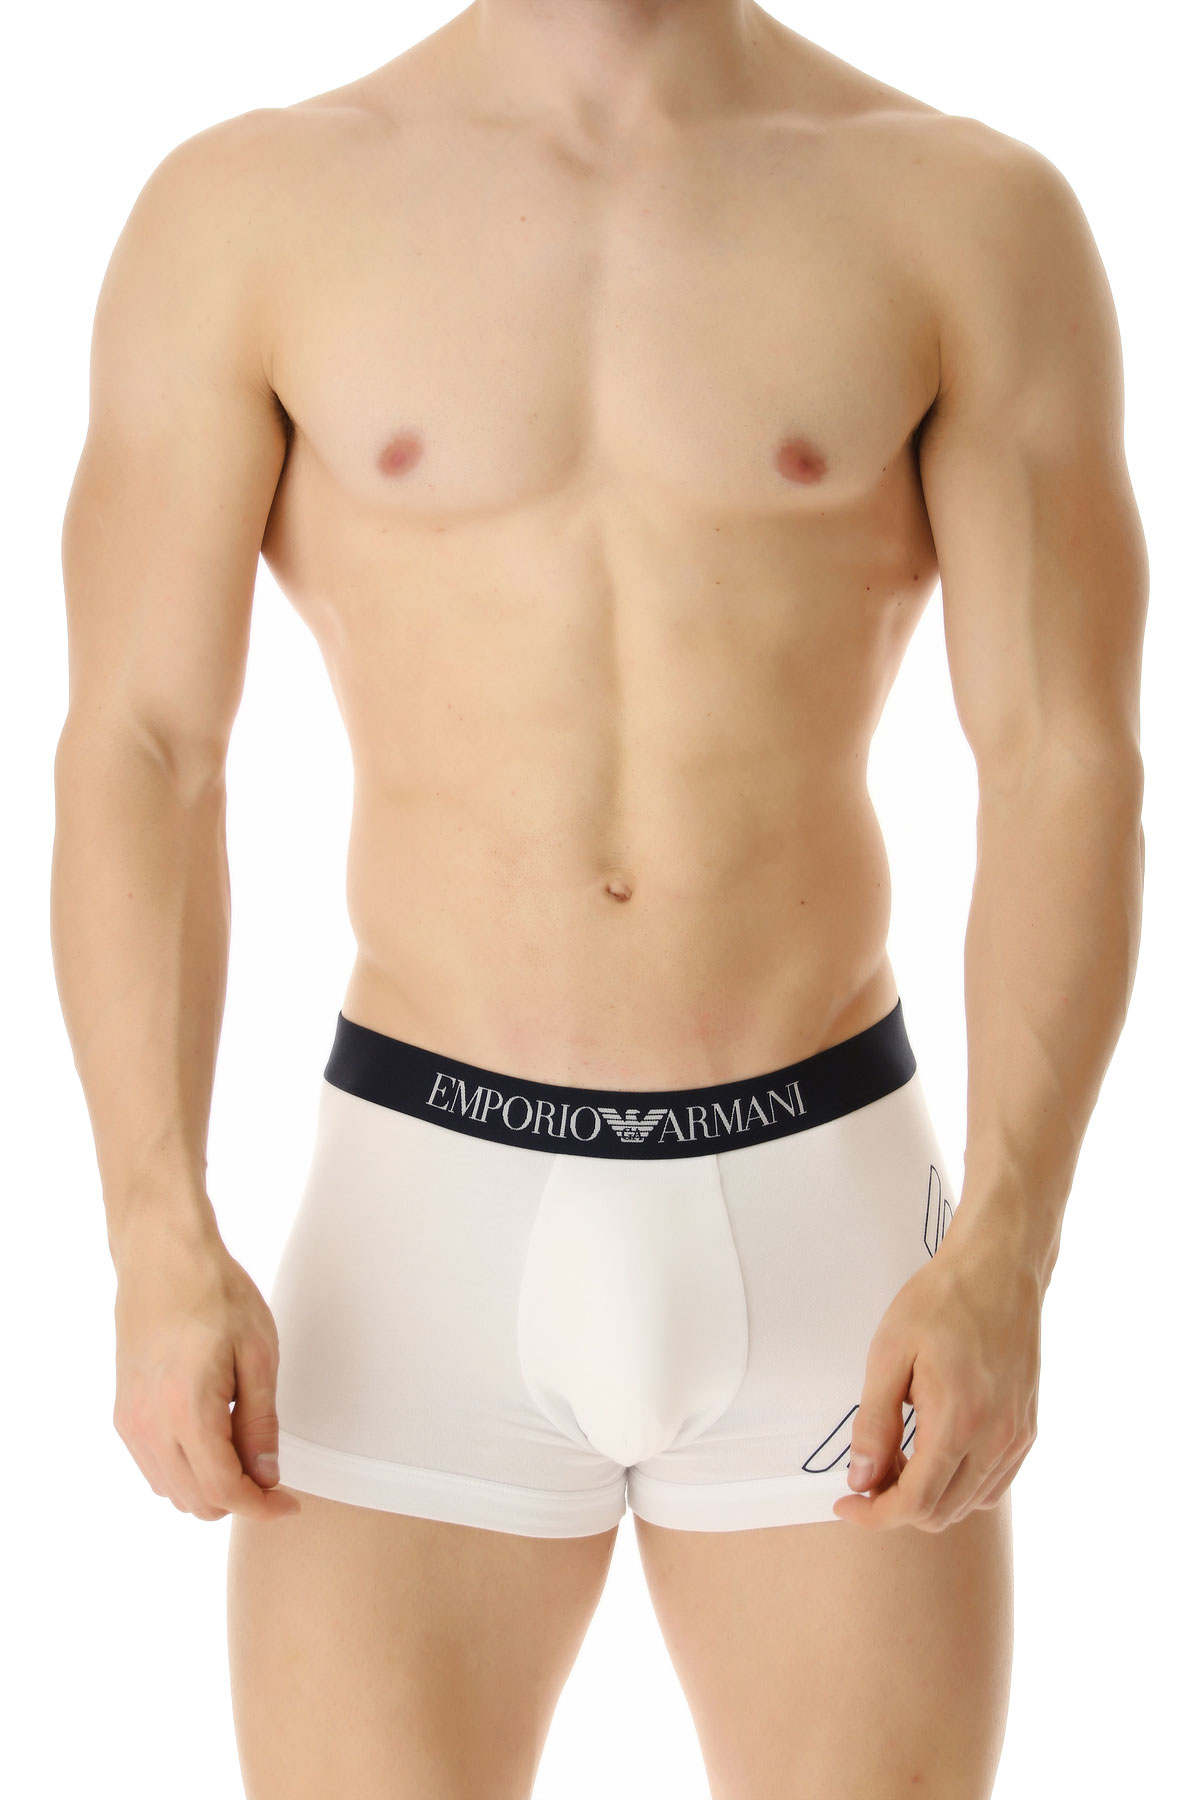 armani underwear australia